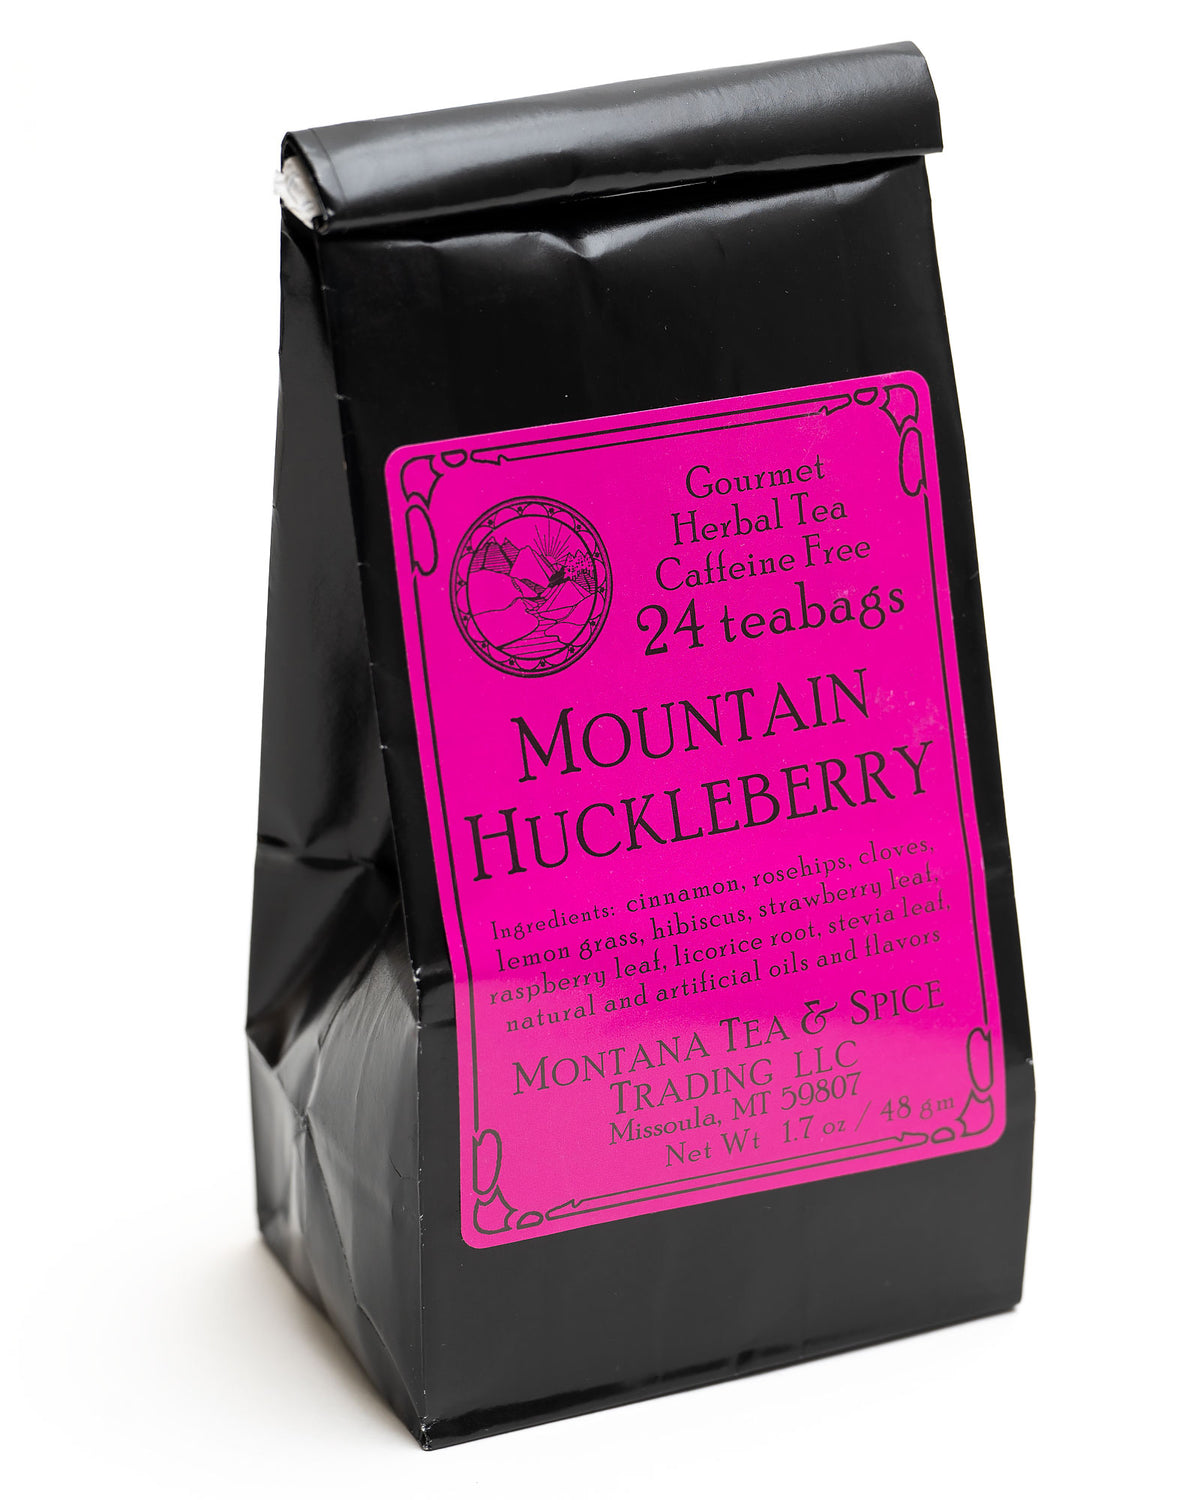 Montana Tea and Spice Mountain Huckleberry